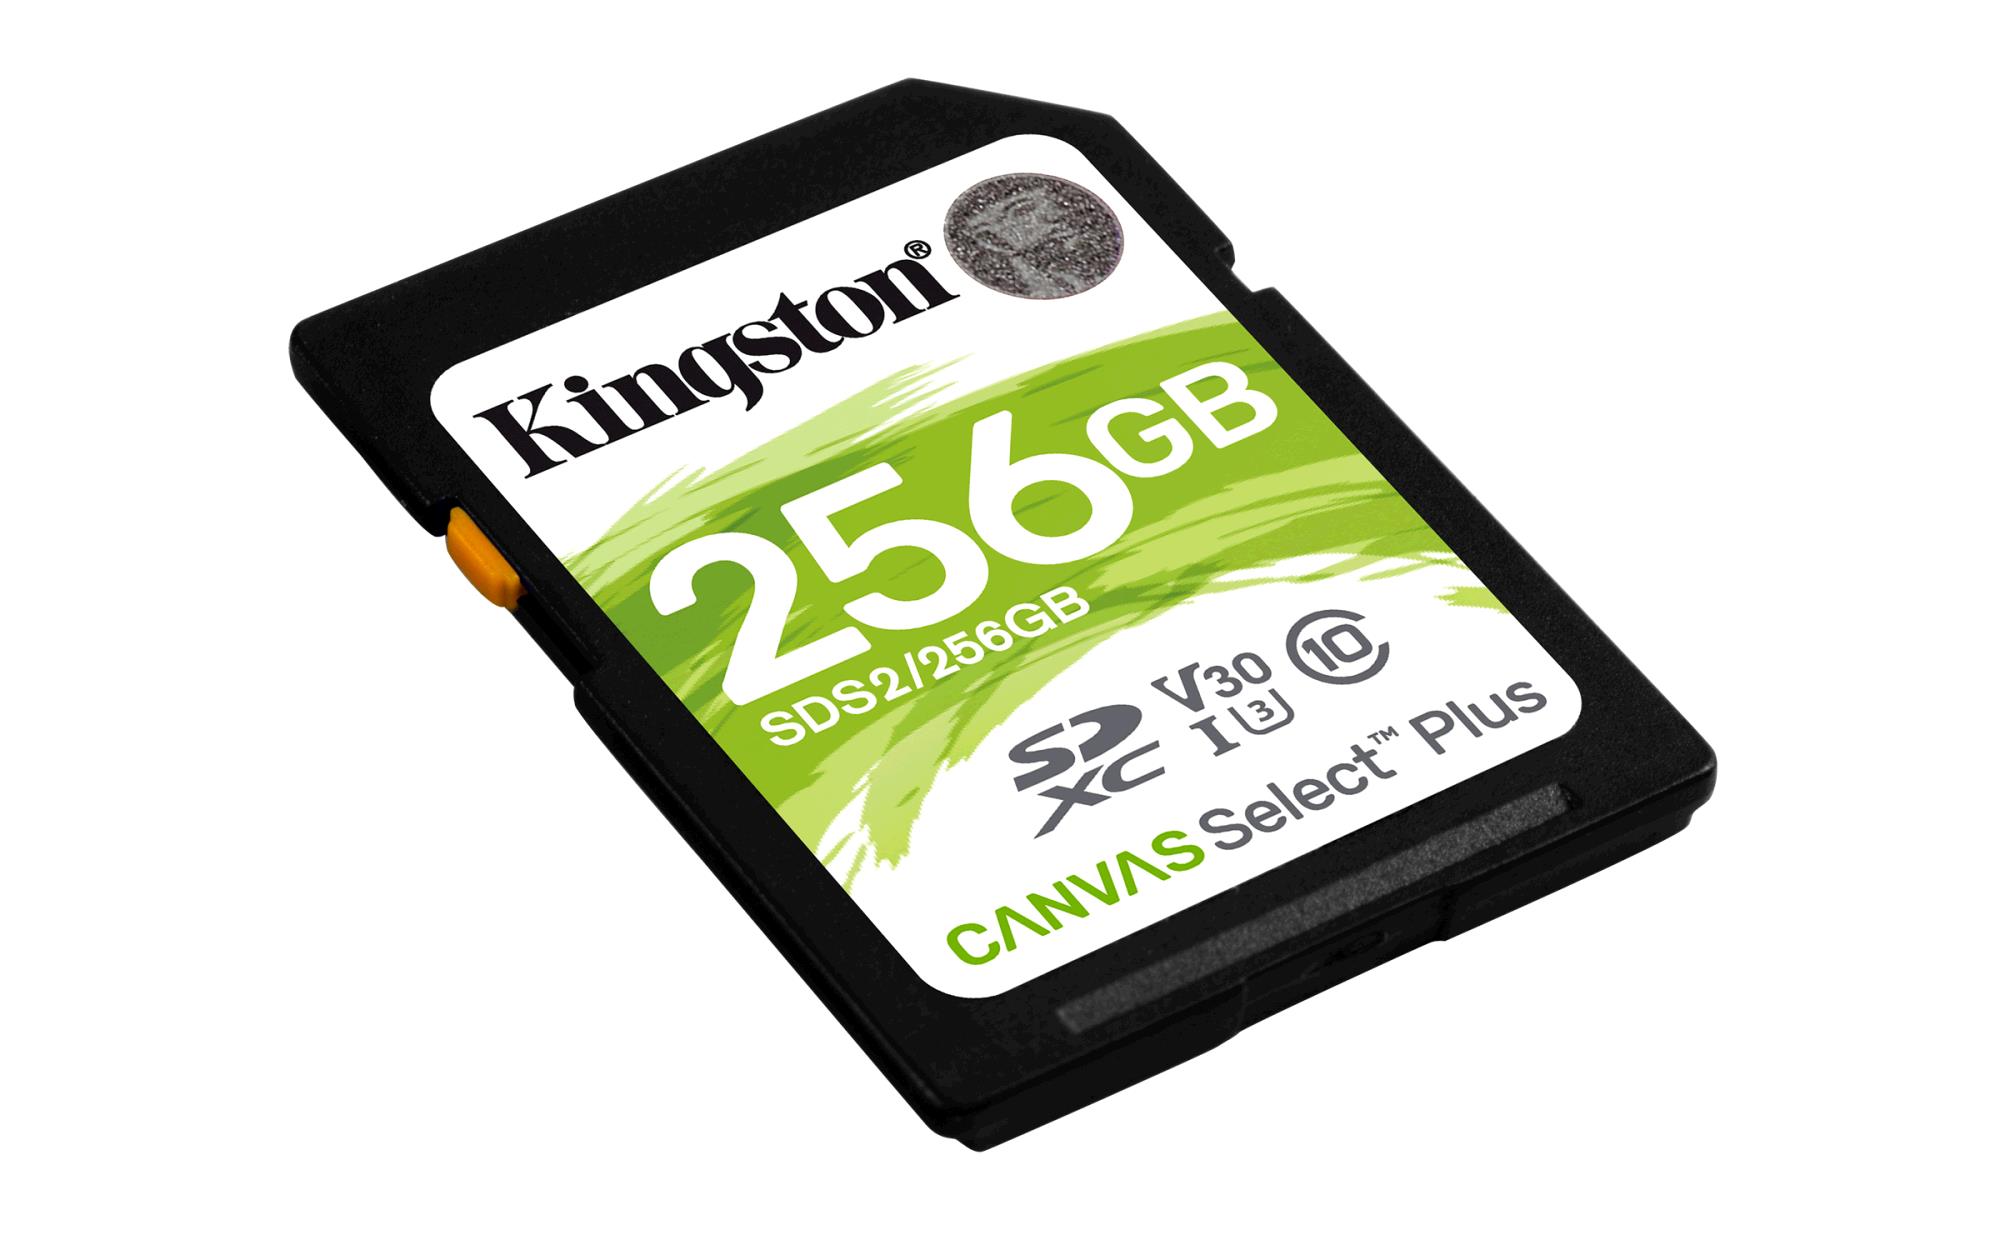 Kingston Flash Canvas Select Plus 256GB SDXC